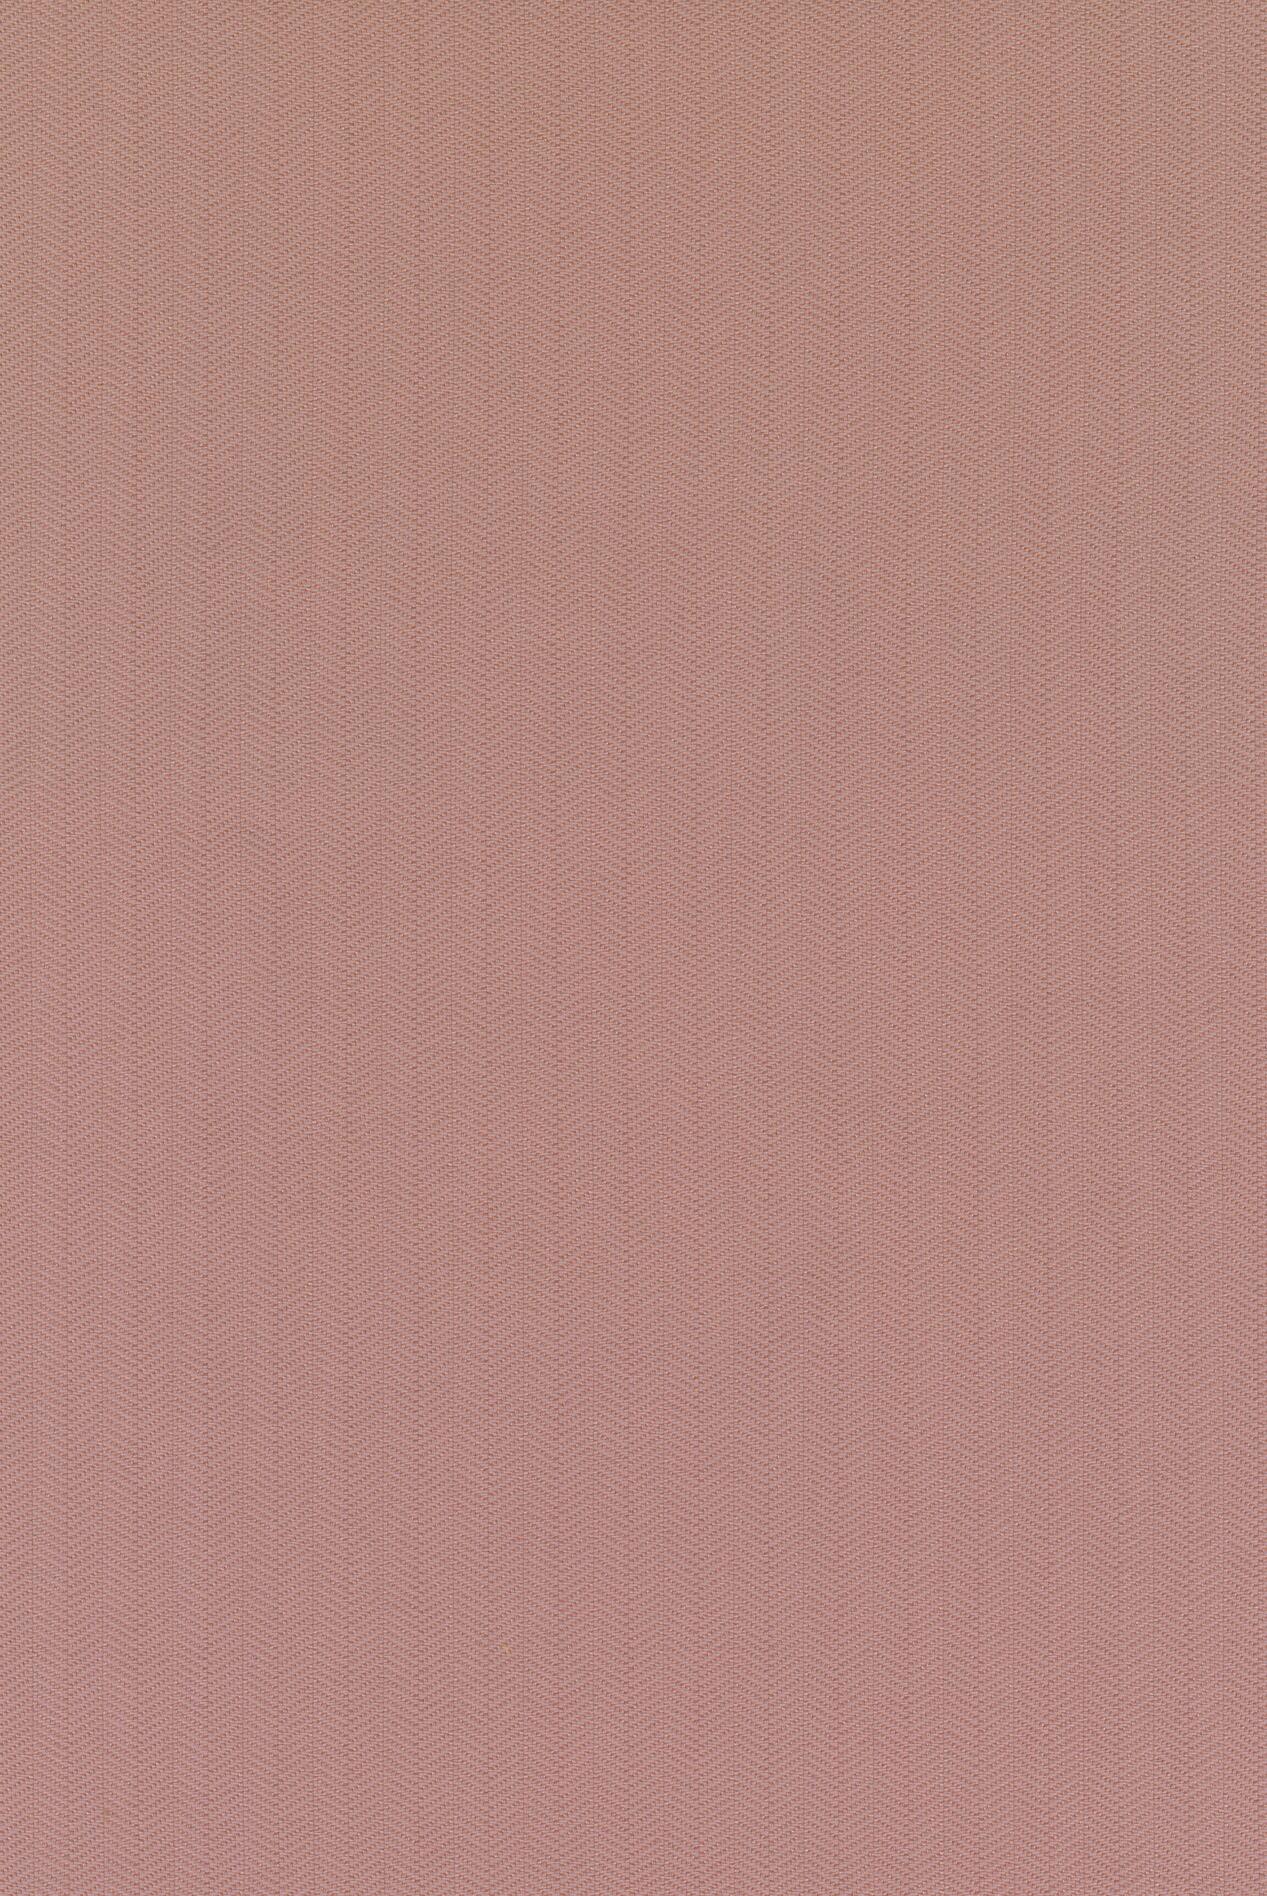 Kvadrat-Broken-Twill-Weave-Upholstery-Fabric-0626.jpg